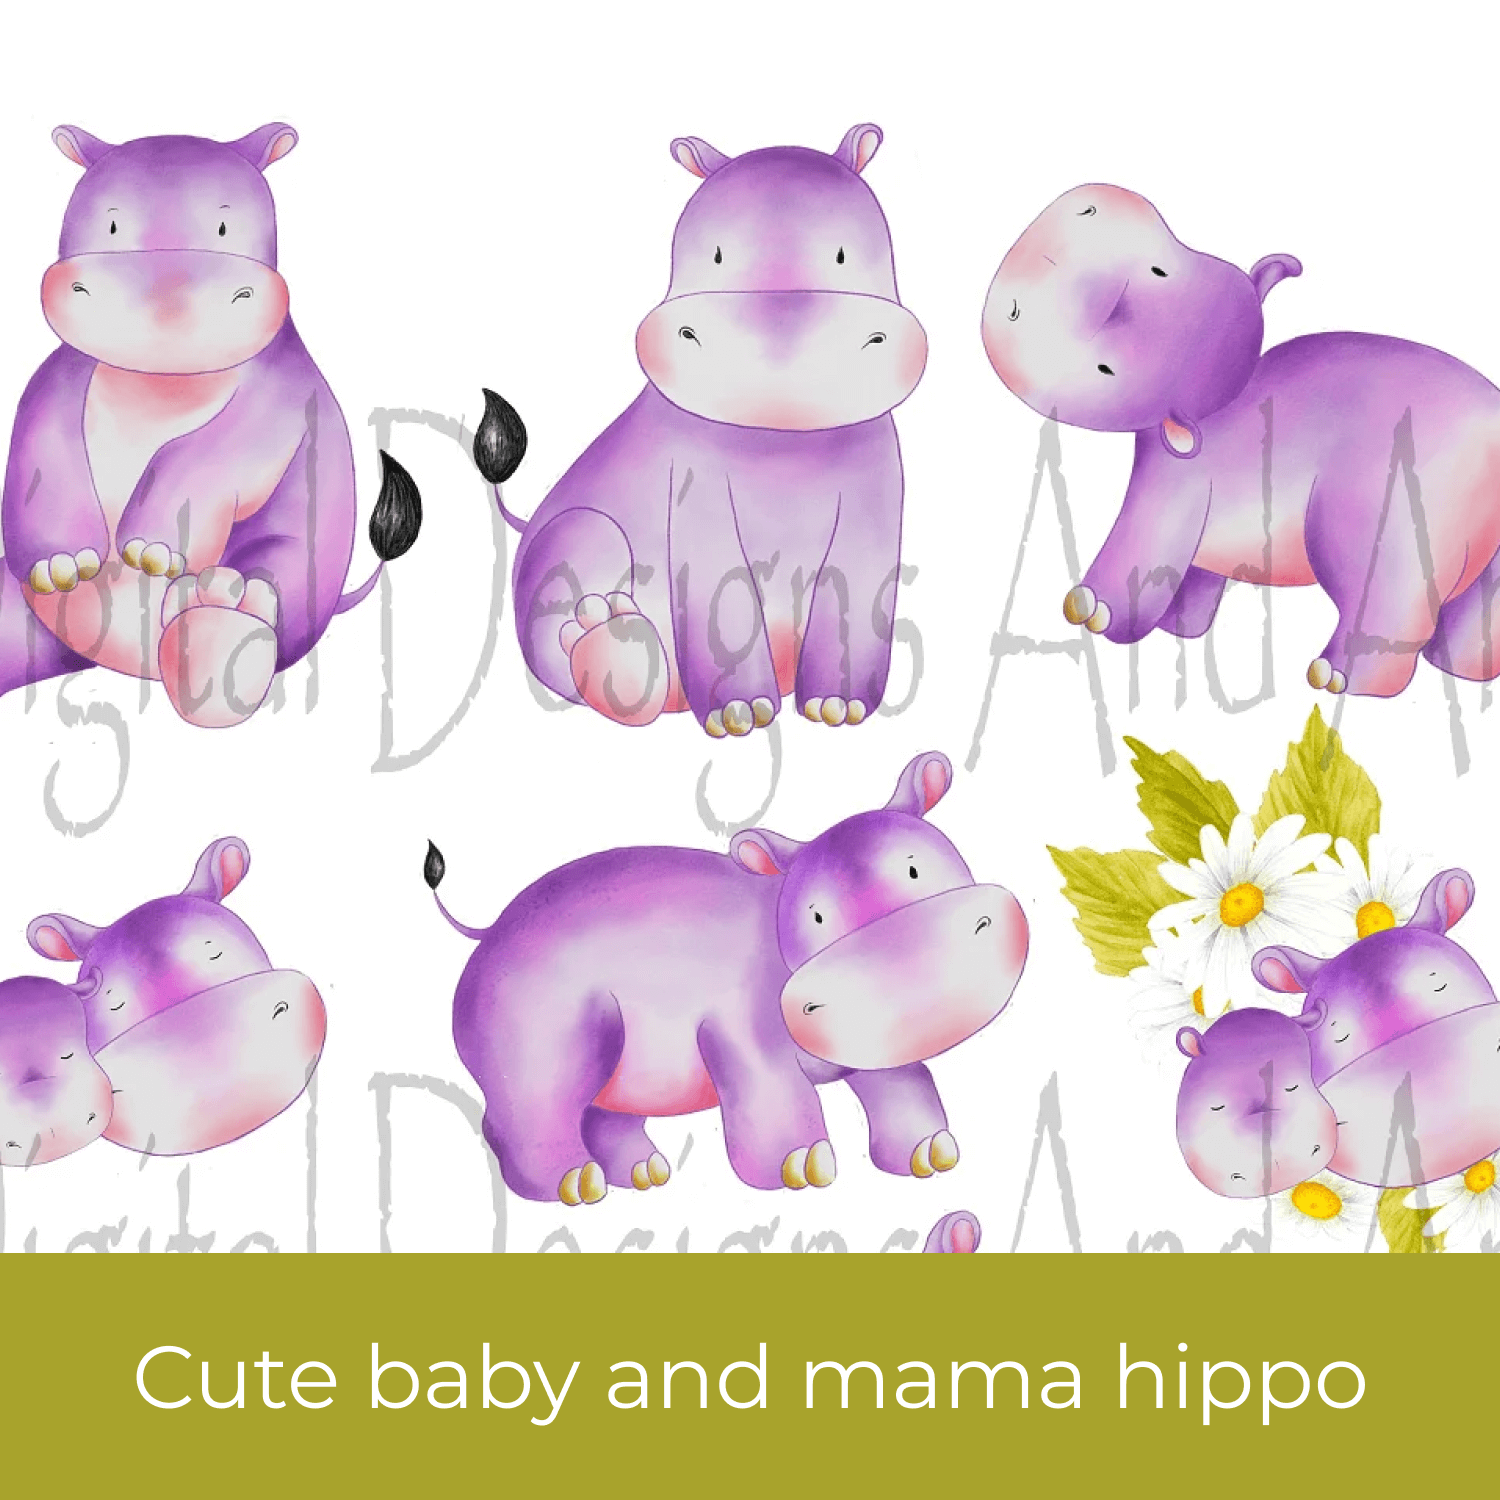 Baby and mama hippo.